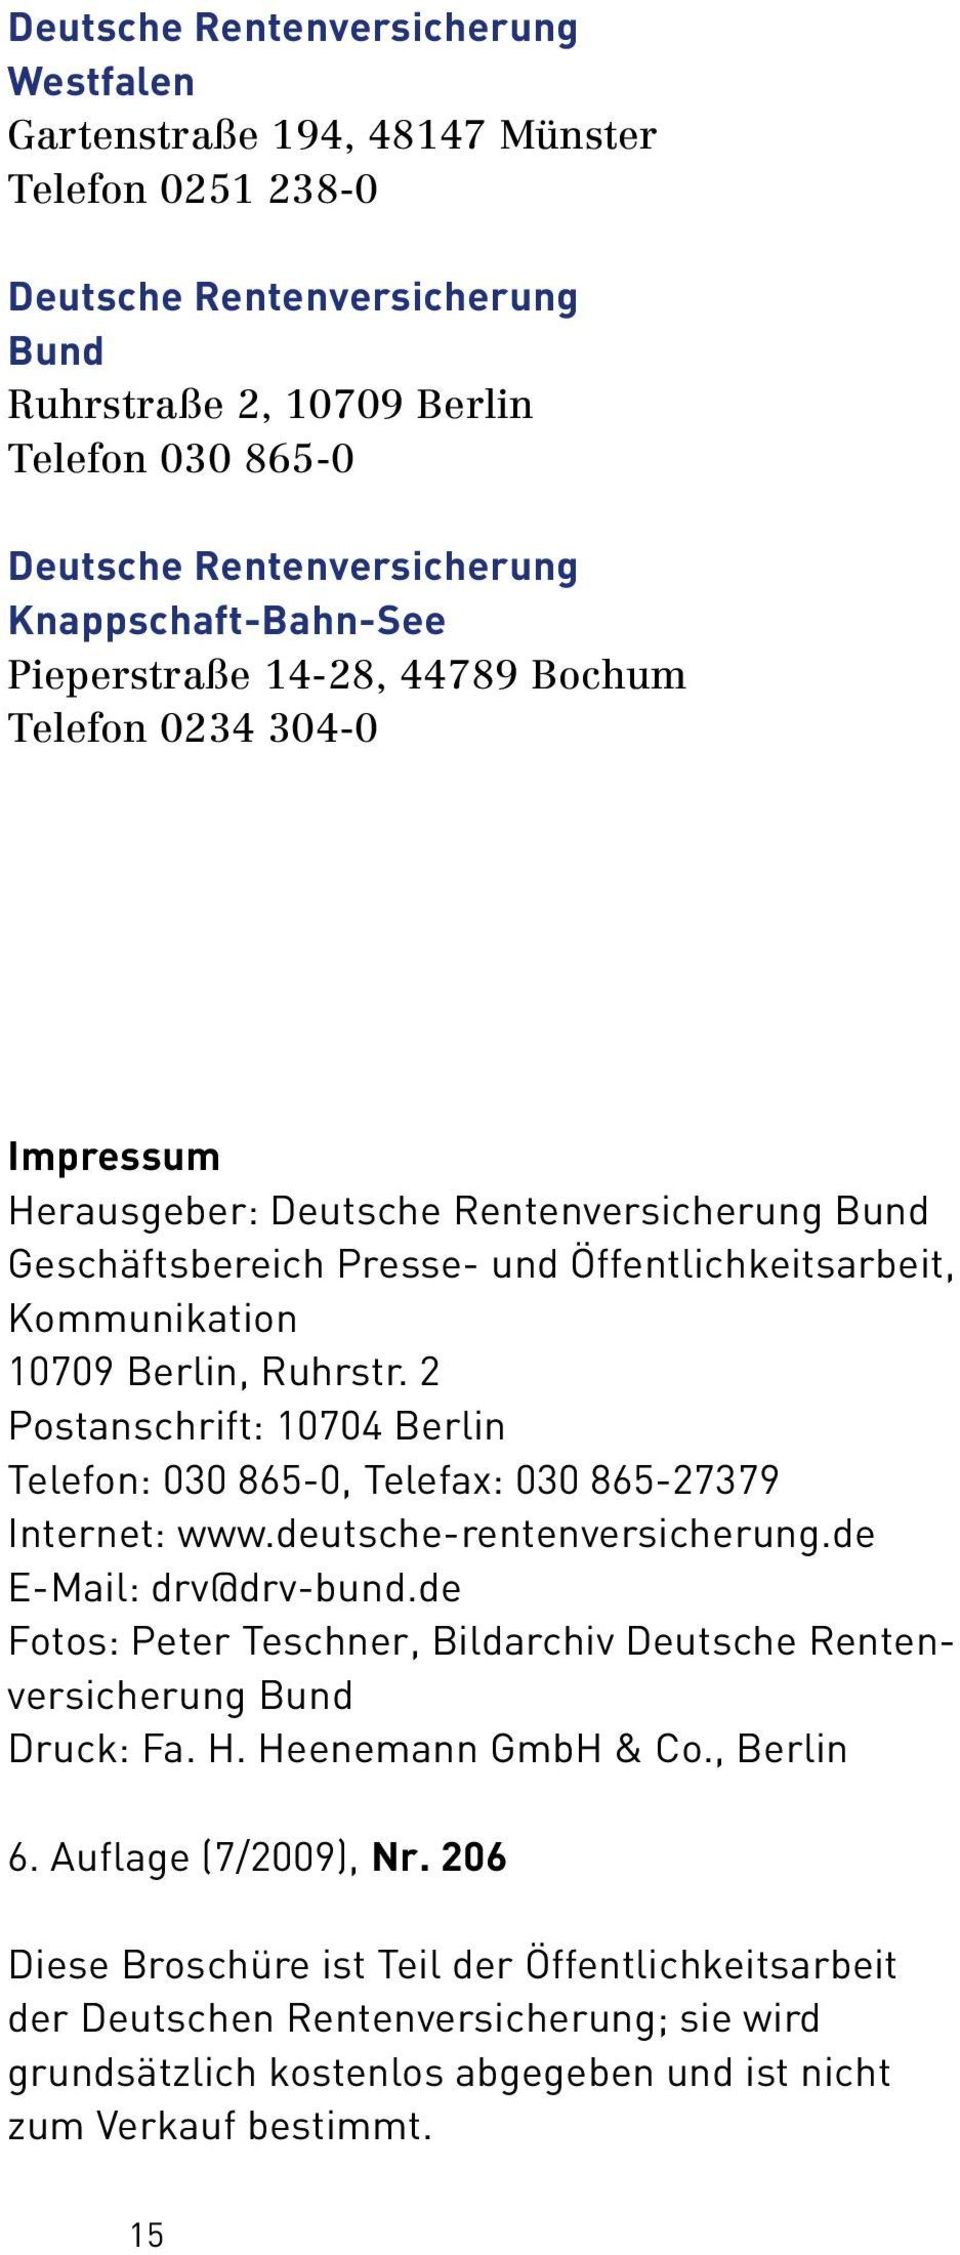 2 Postanschrift: 10704 Berlin Telefon: 030 865-0, Telefax: 030 865-27379 Internet: www.deutsche-rentenversicherung.de E-Mail: drv@drv-bund.